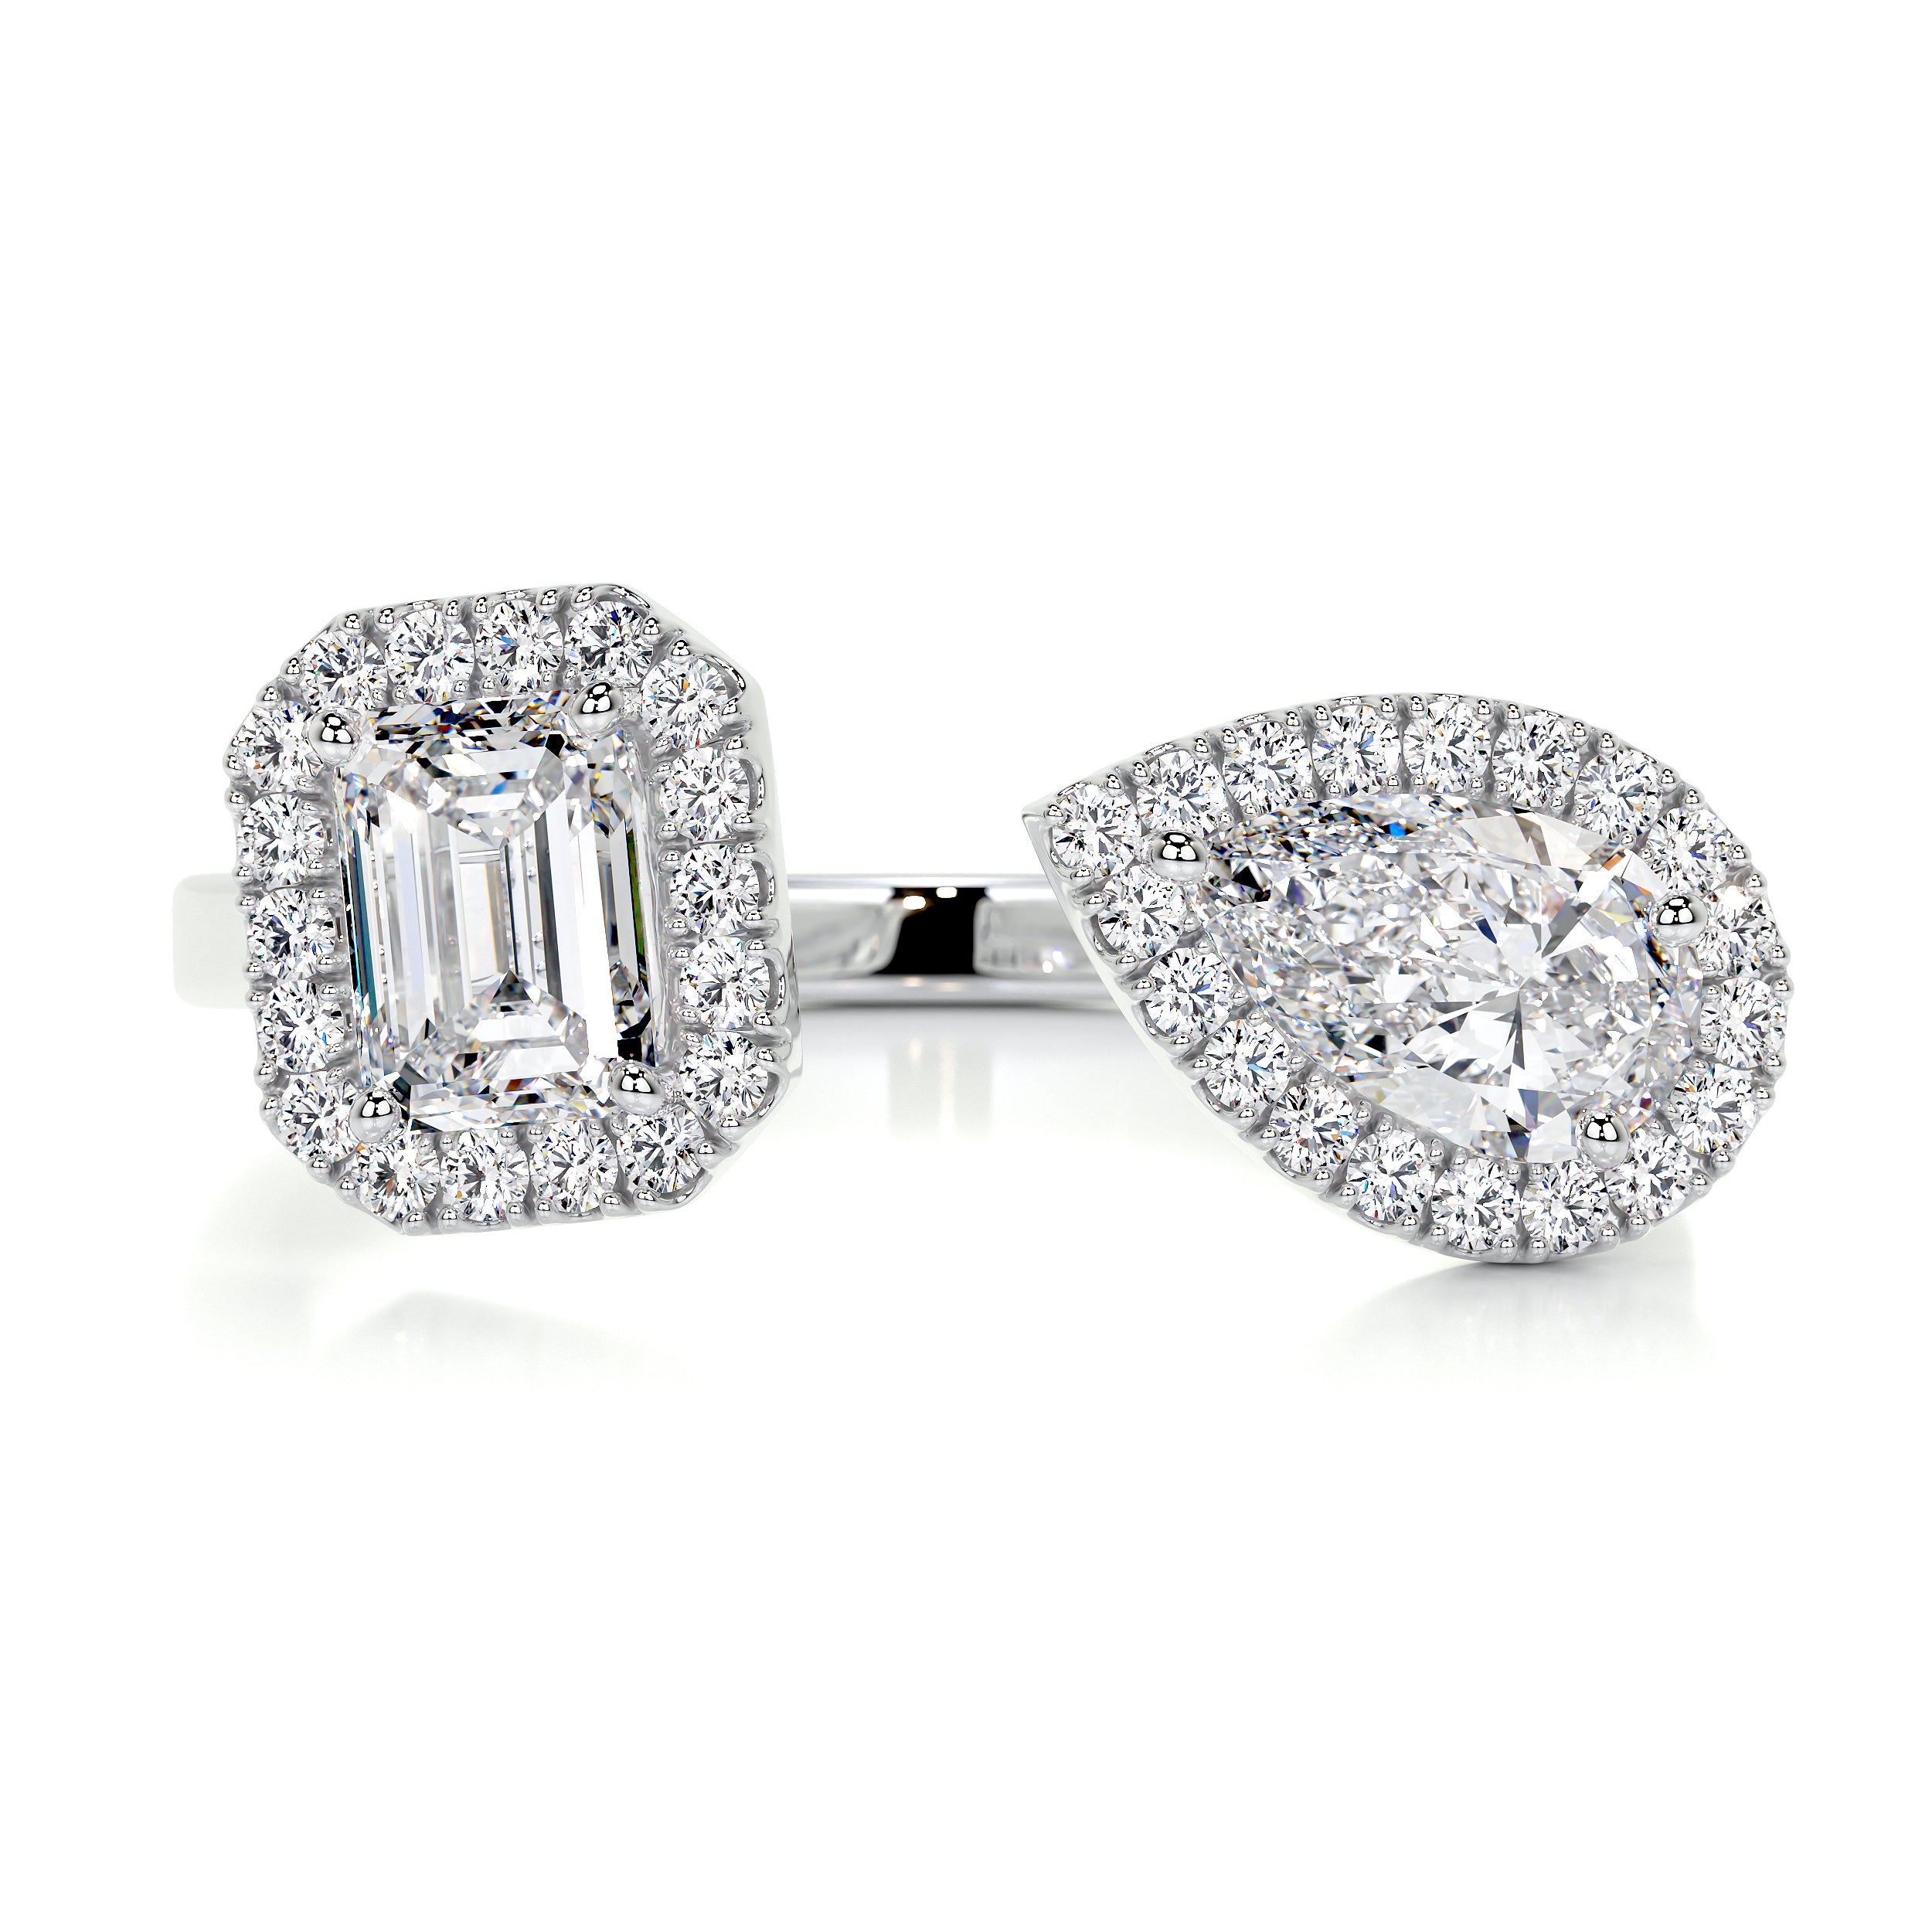 Edith Designer Diamond Ring   (1.2 Carat) -18K White Gold